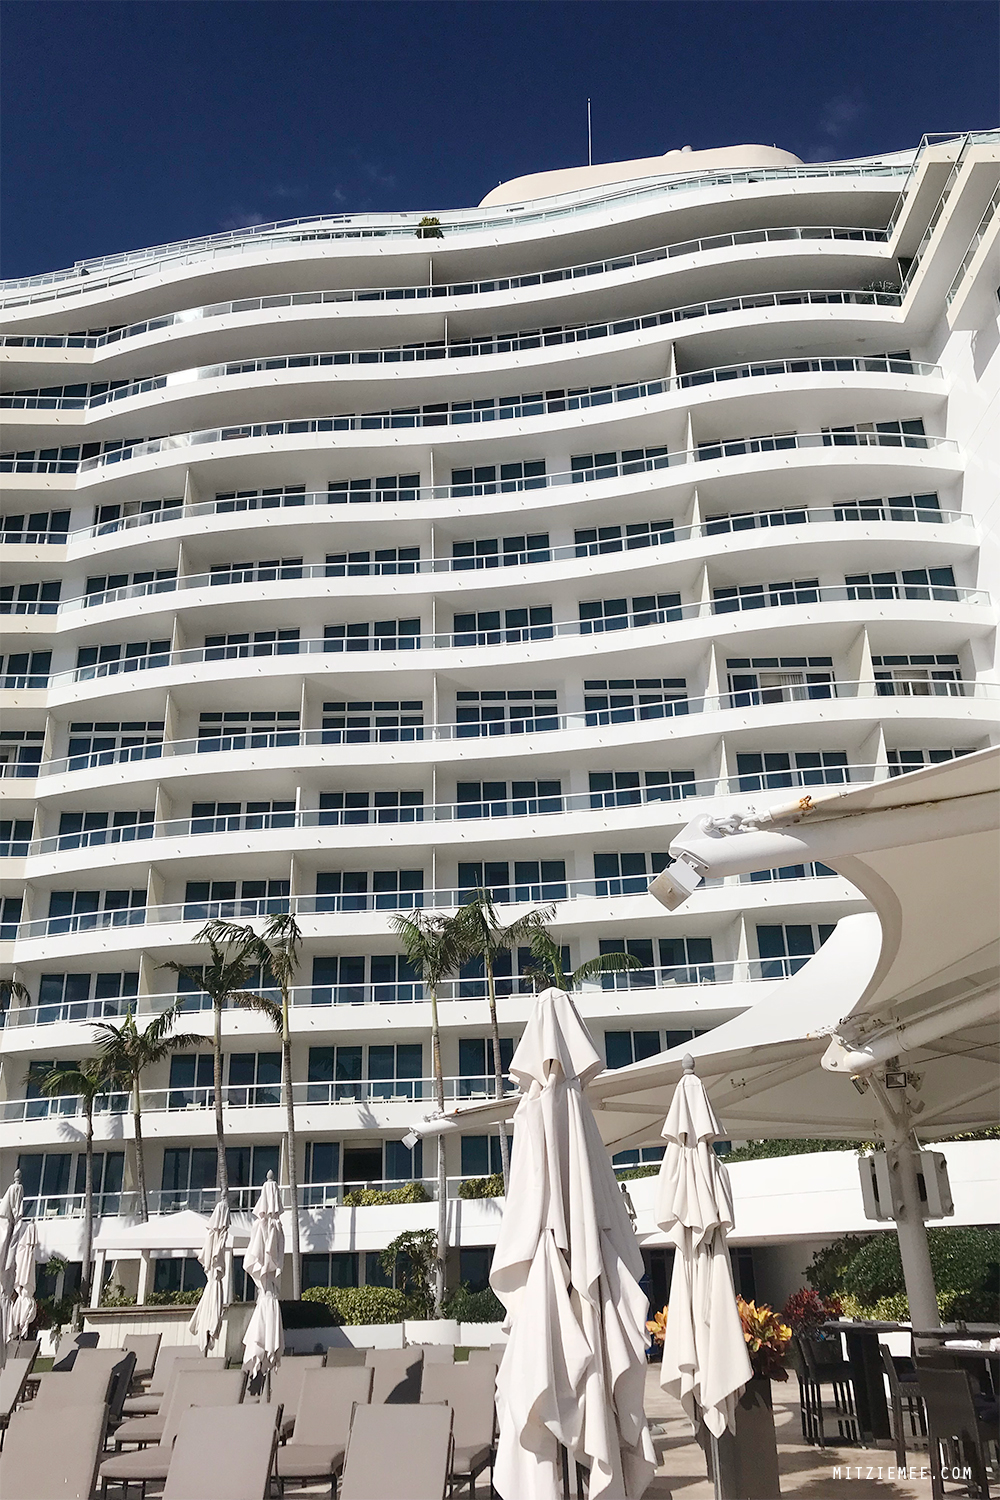 Ritz-Carlton Fort Lauderdale